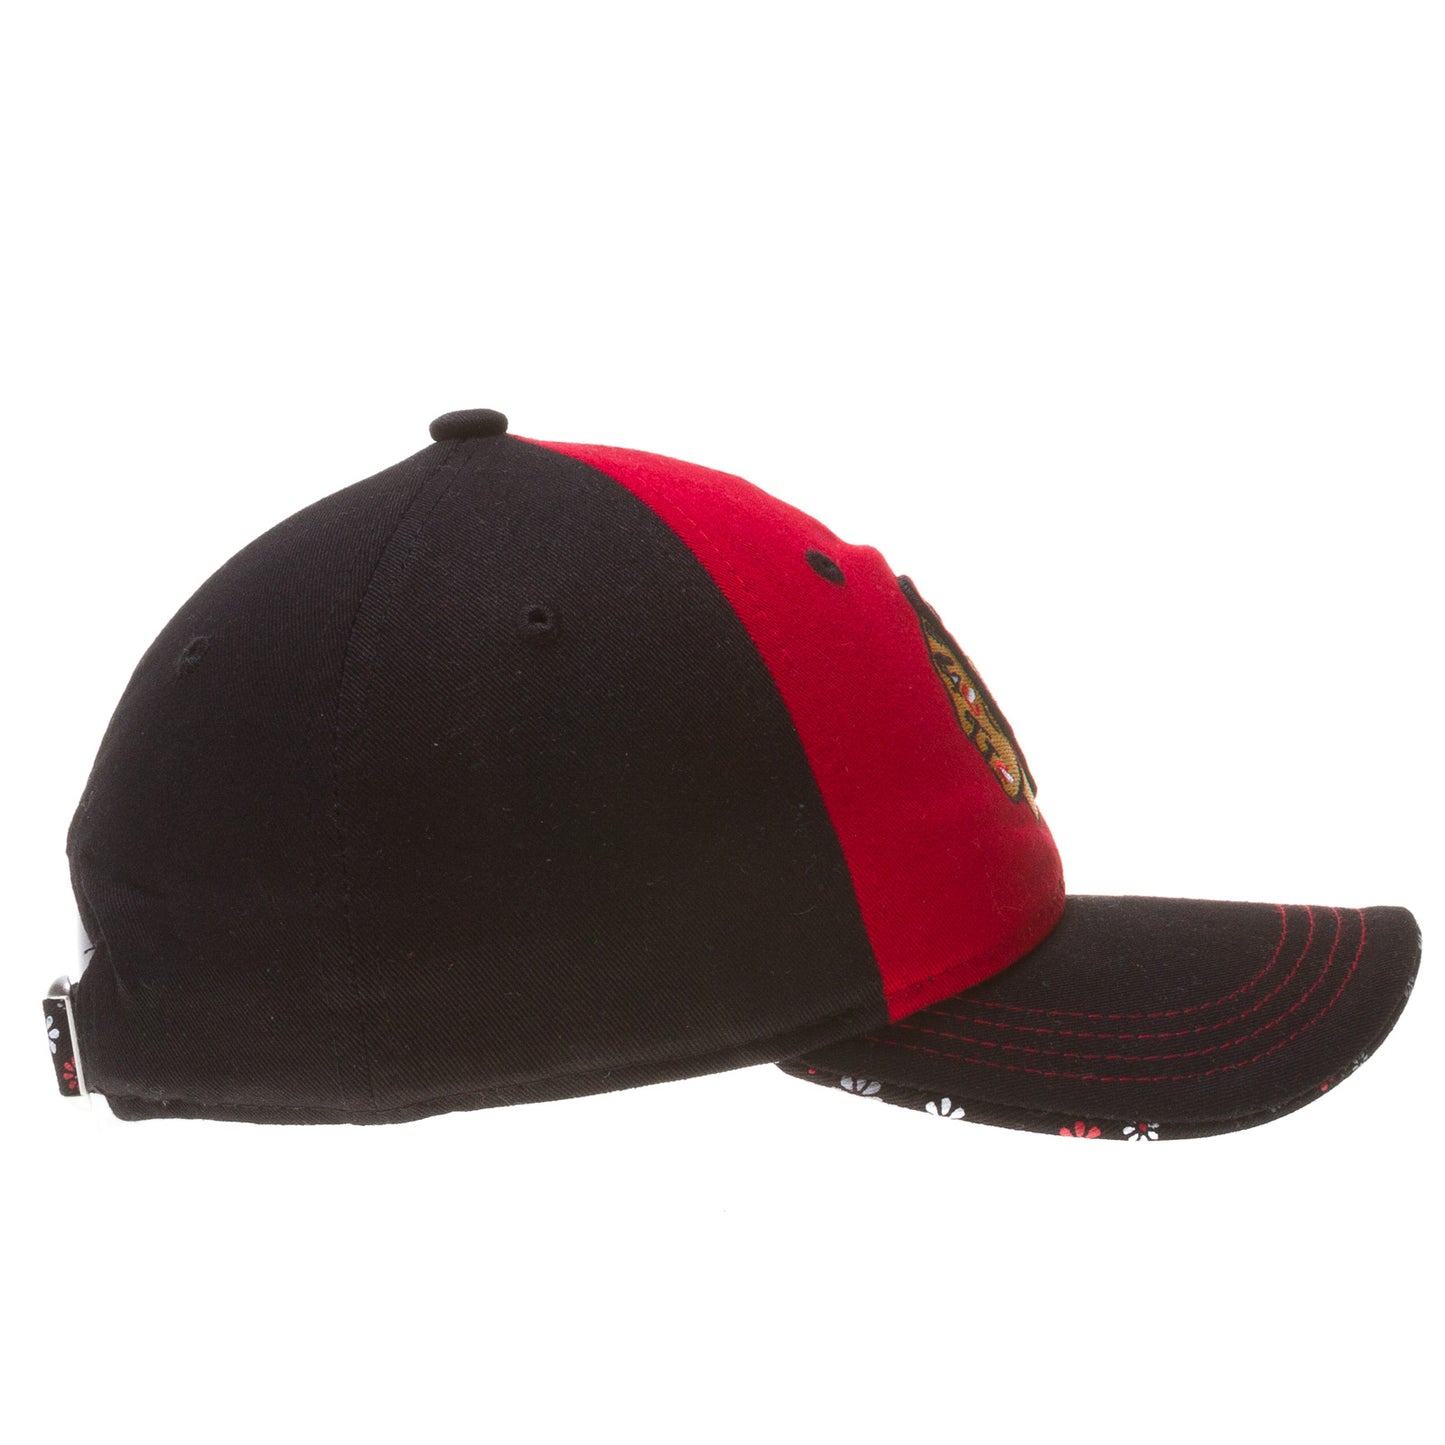 Chicago Blackhawks Two Tone Girls Adjustable Hat